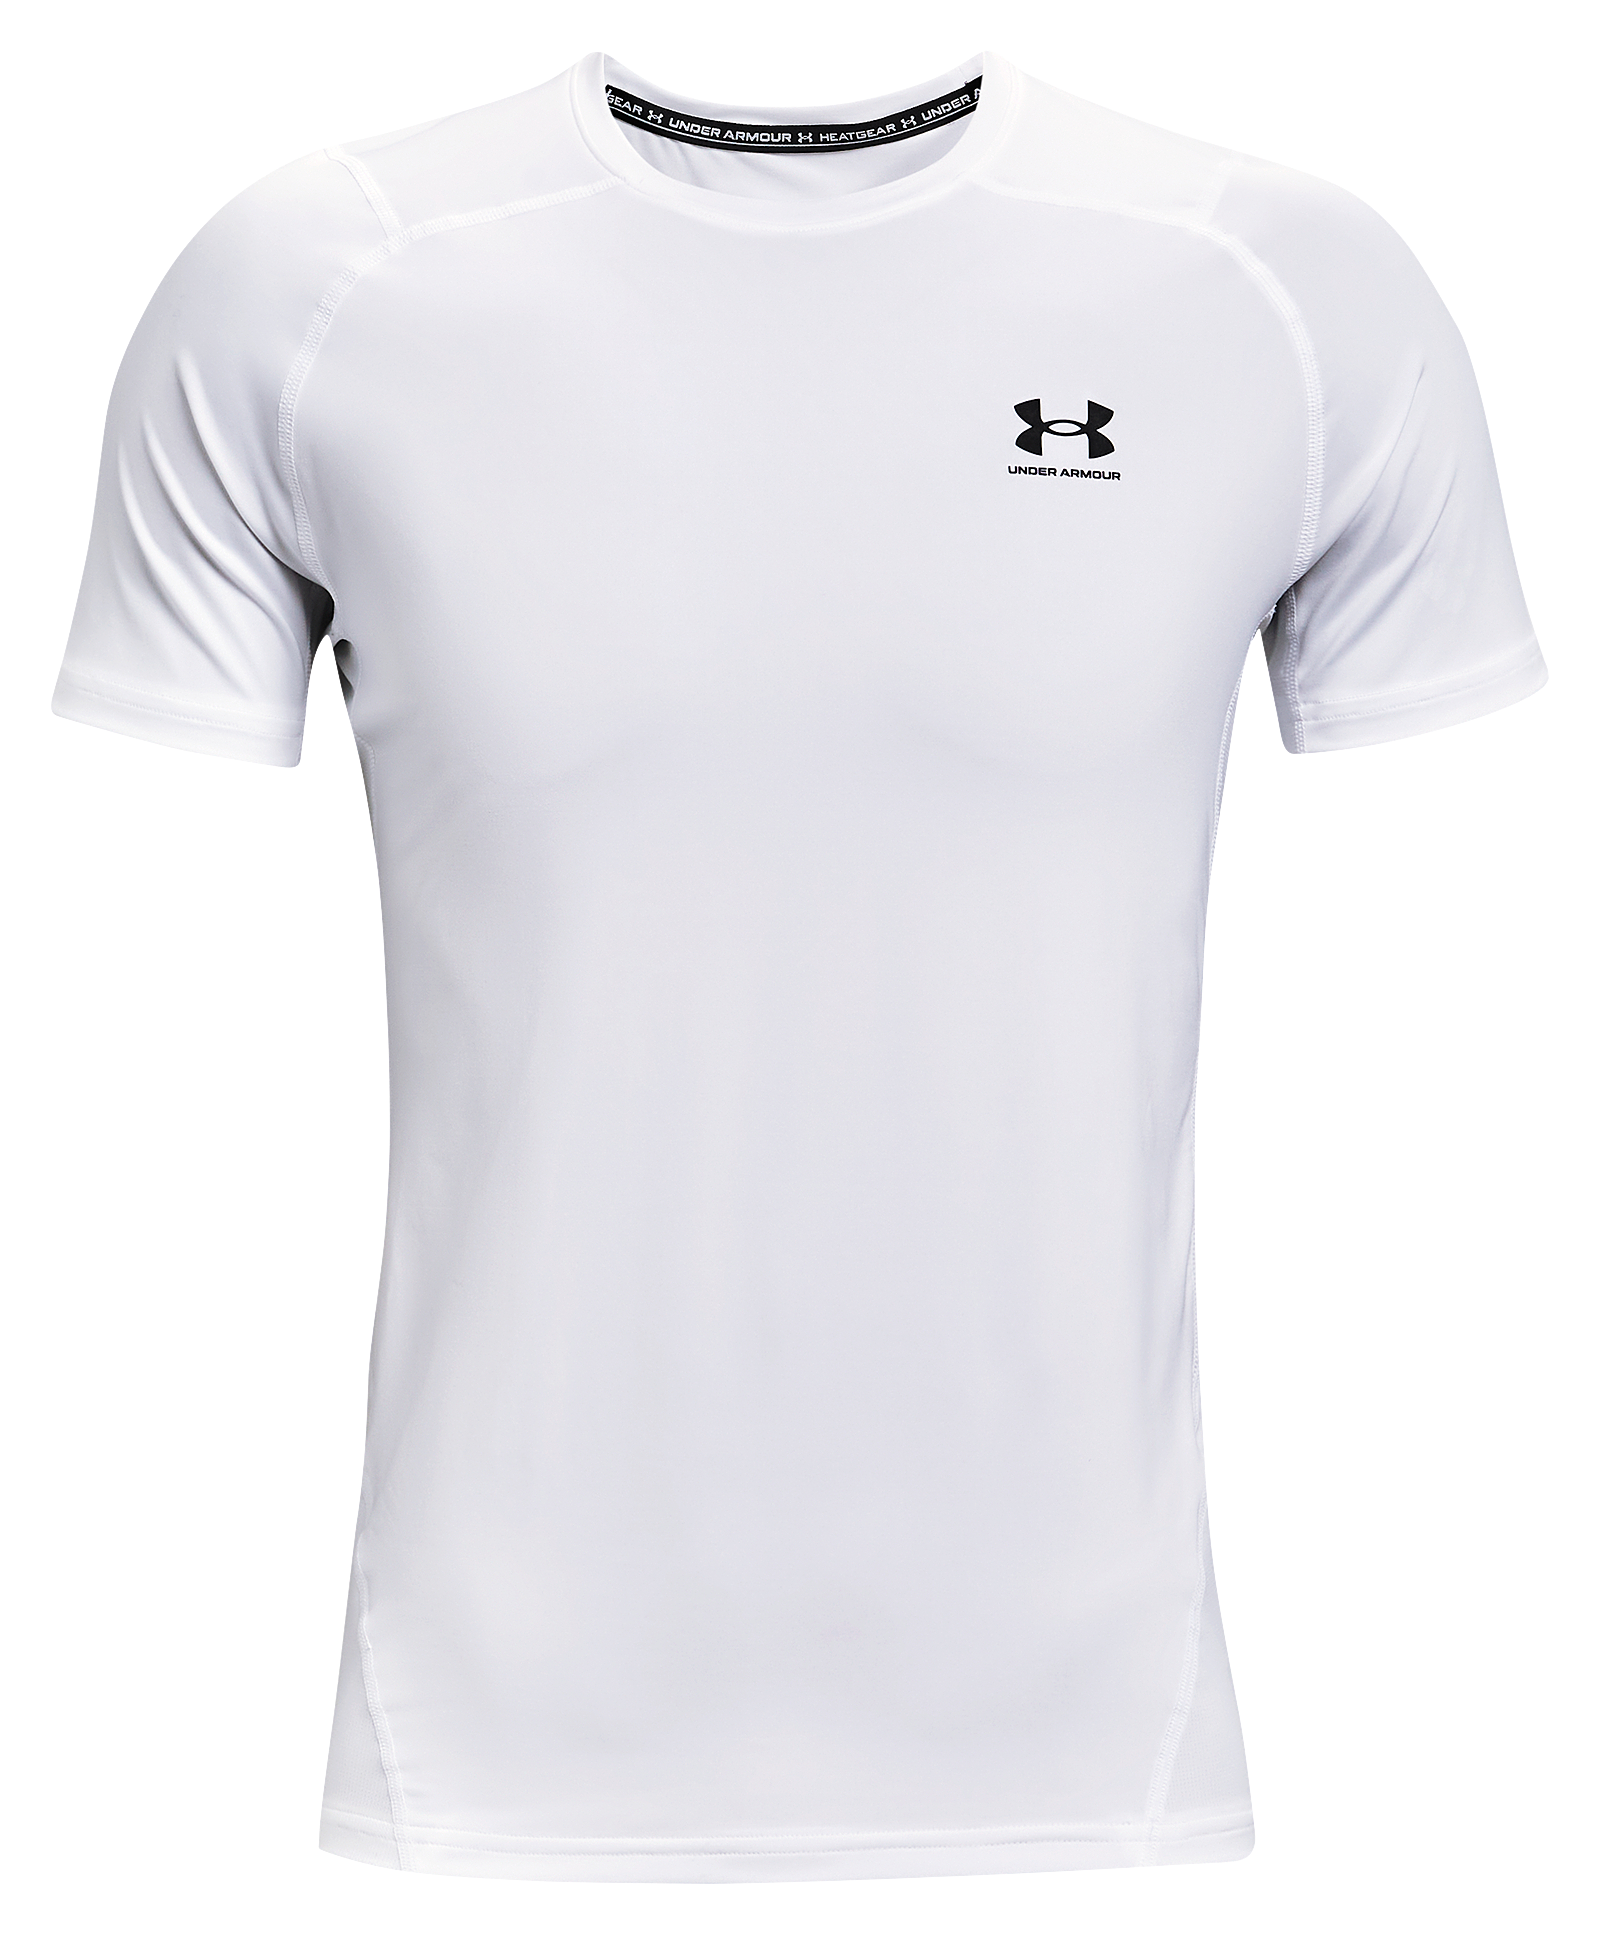 Under Armour HeatGear Fitted Short-Sleeve T-Shirt for Men - White - 4XL